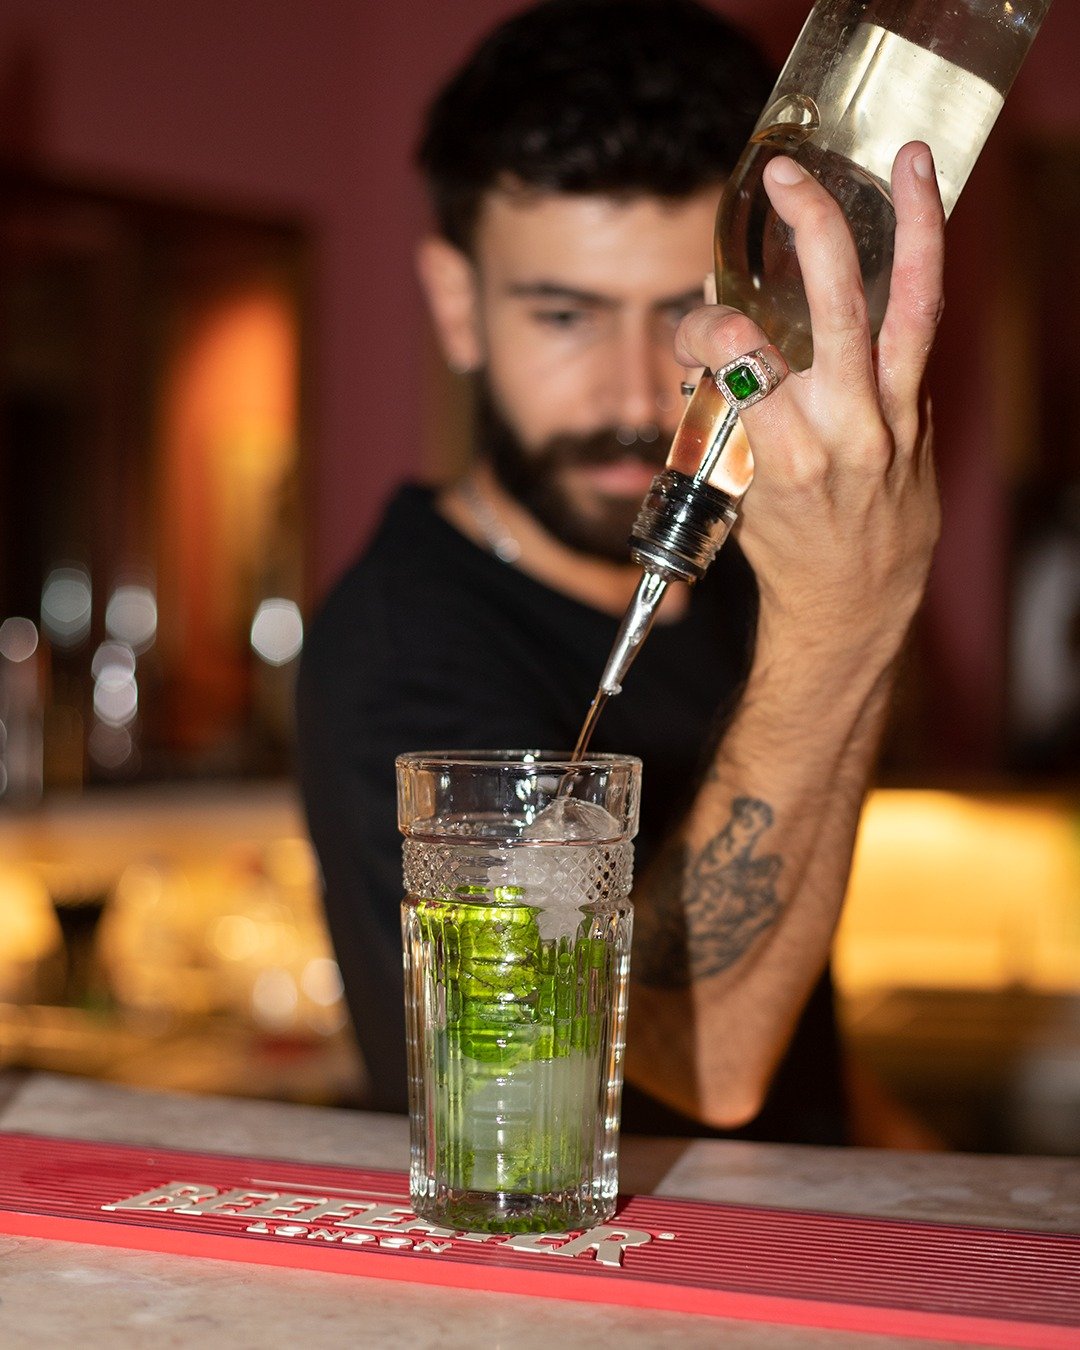 It's Friday and Saturday, with a dose of good and bad habits.
||
&Eacute; sexta e sab&aacute;do, com uma dose de bom e mau h&aacute;bito.

#obomomaueovilao #bar #lisbonnight #lisbon #happyhour #signaturecocktails #cocktails #CocktailsLisboa #LisboaDr